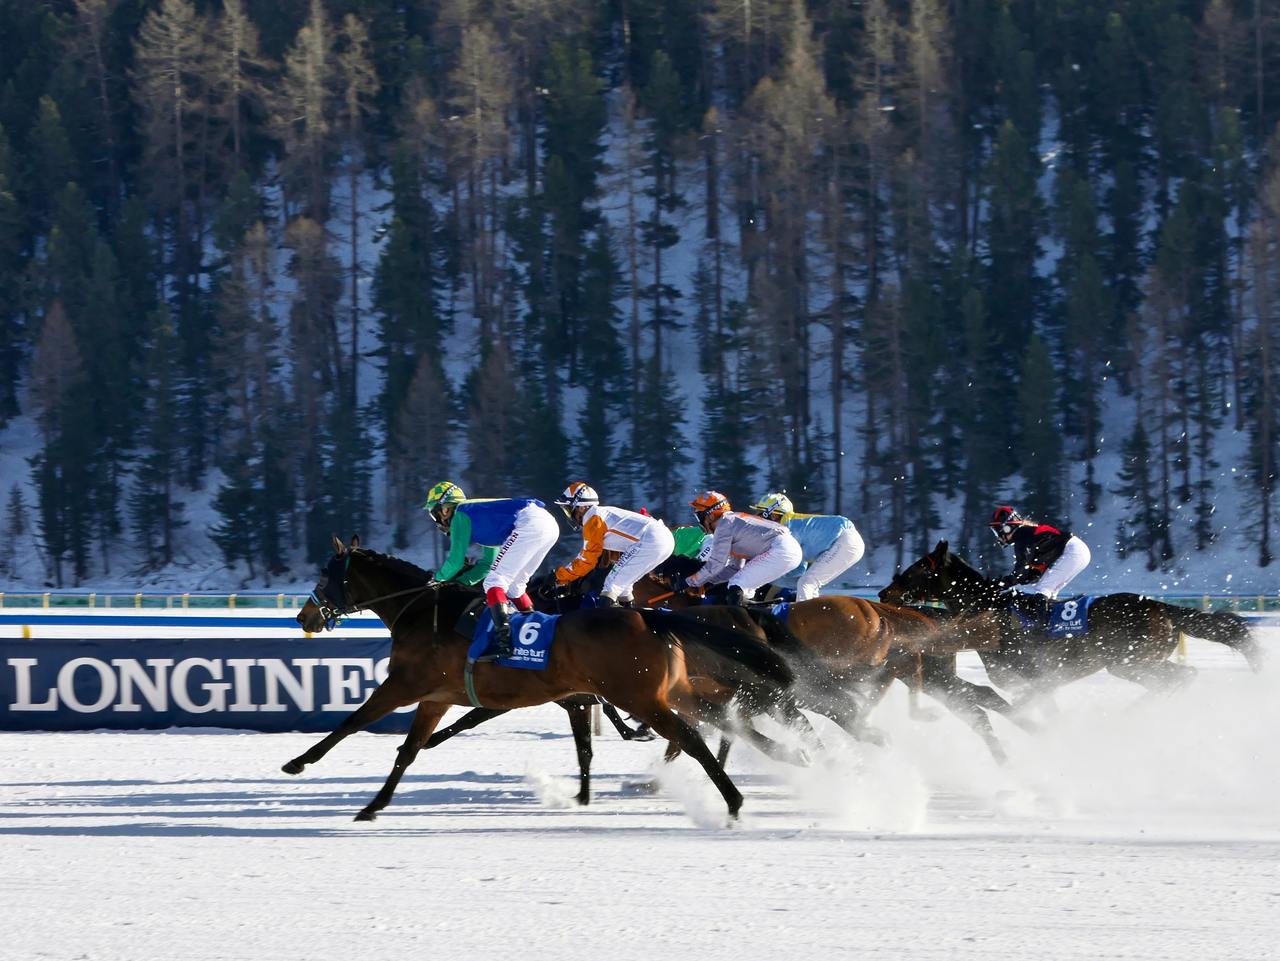 Horse Racing In Snow!